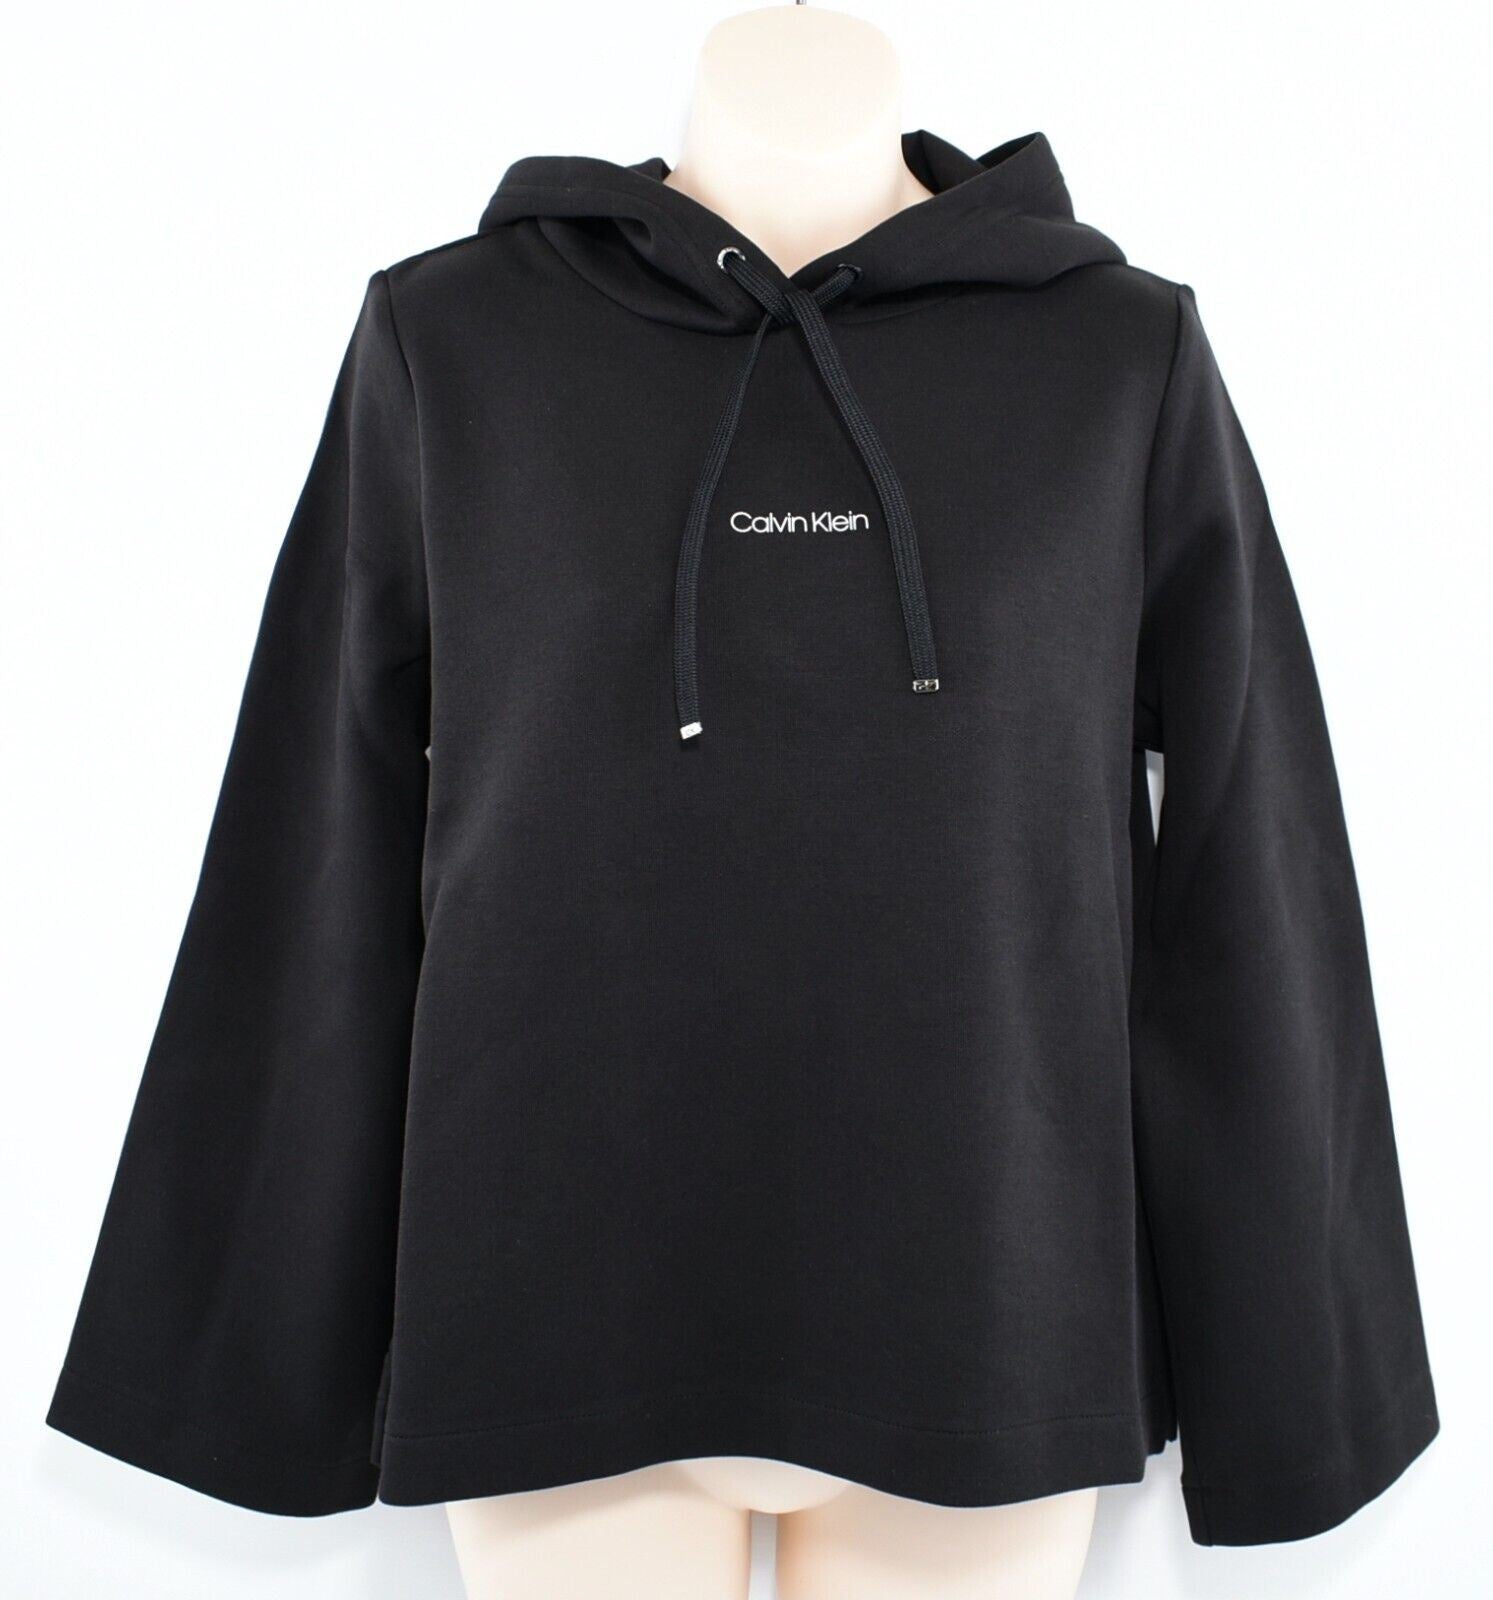 CALVIN KLEIN Women's Mini CK Cropped Hoodie Sweatshirt, Black, size M (UK 12)